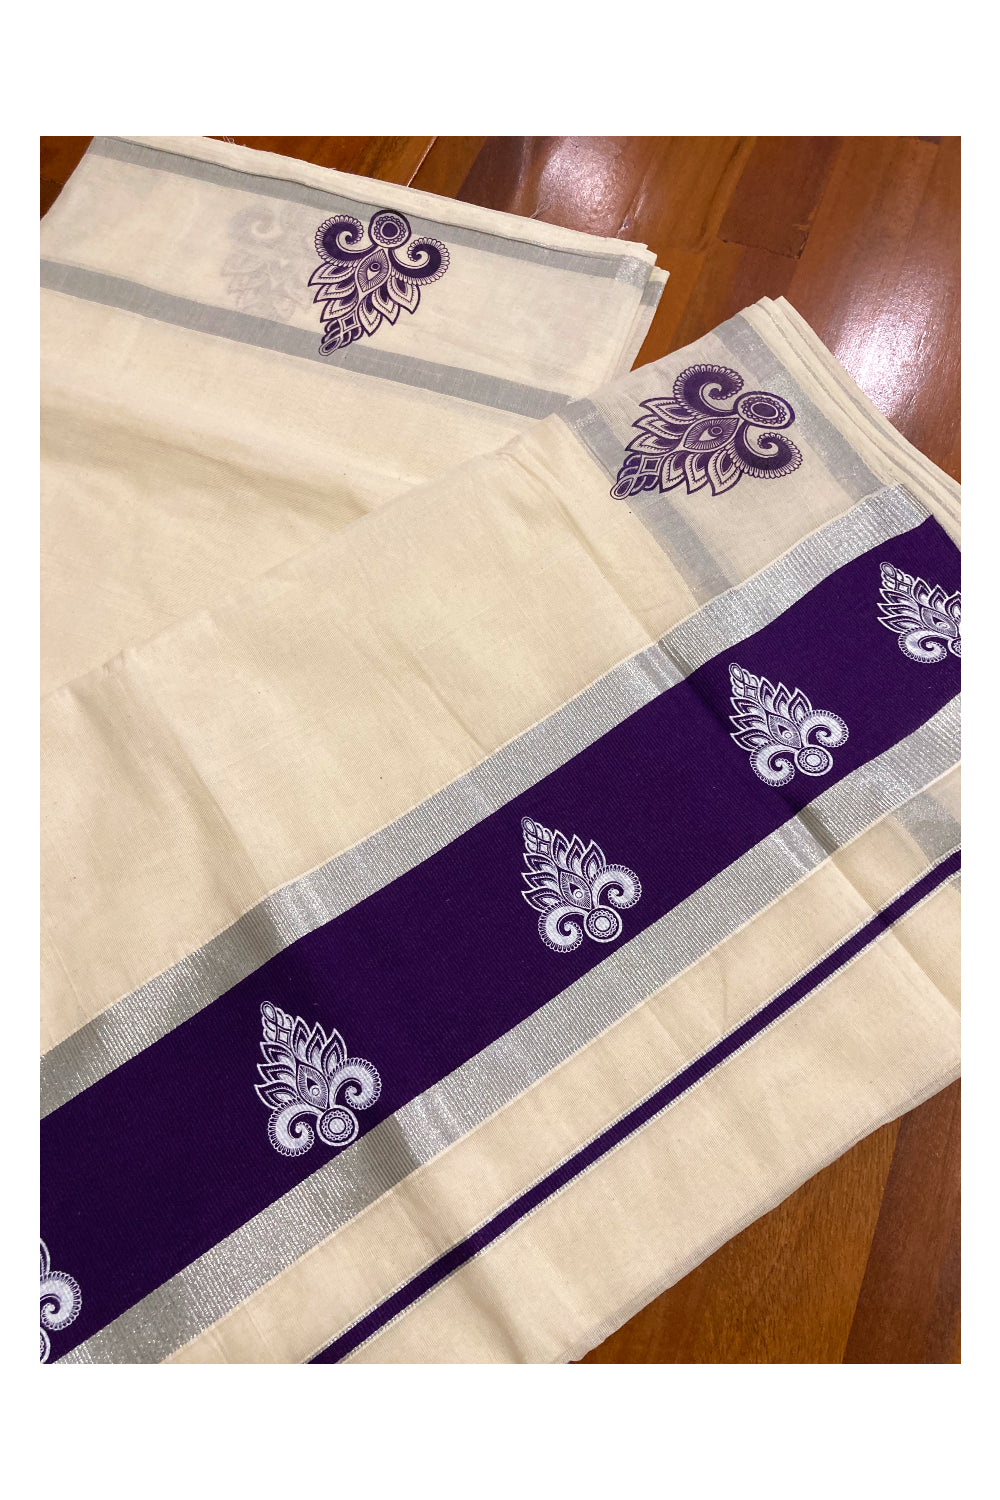 Pure Cotton Kerala Silver Kasavu Saree with White Block Prints in Dark Violet Pallu